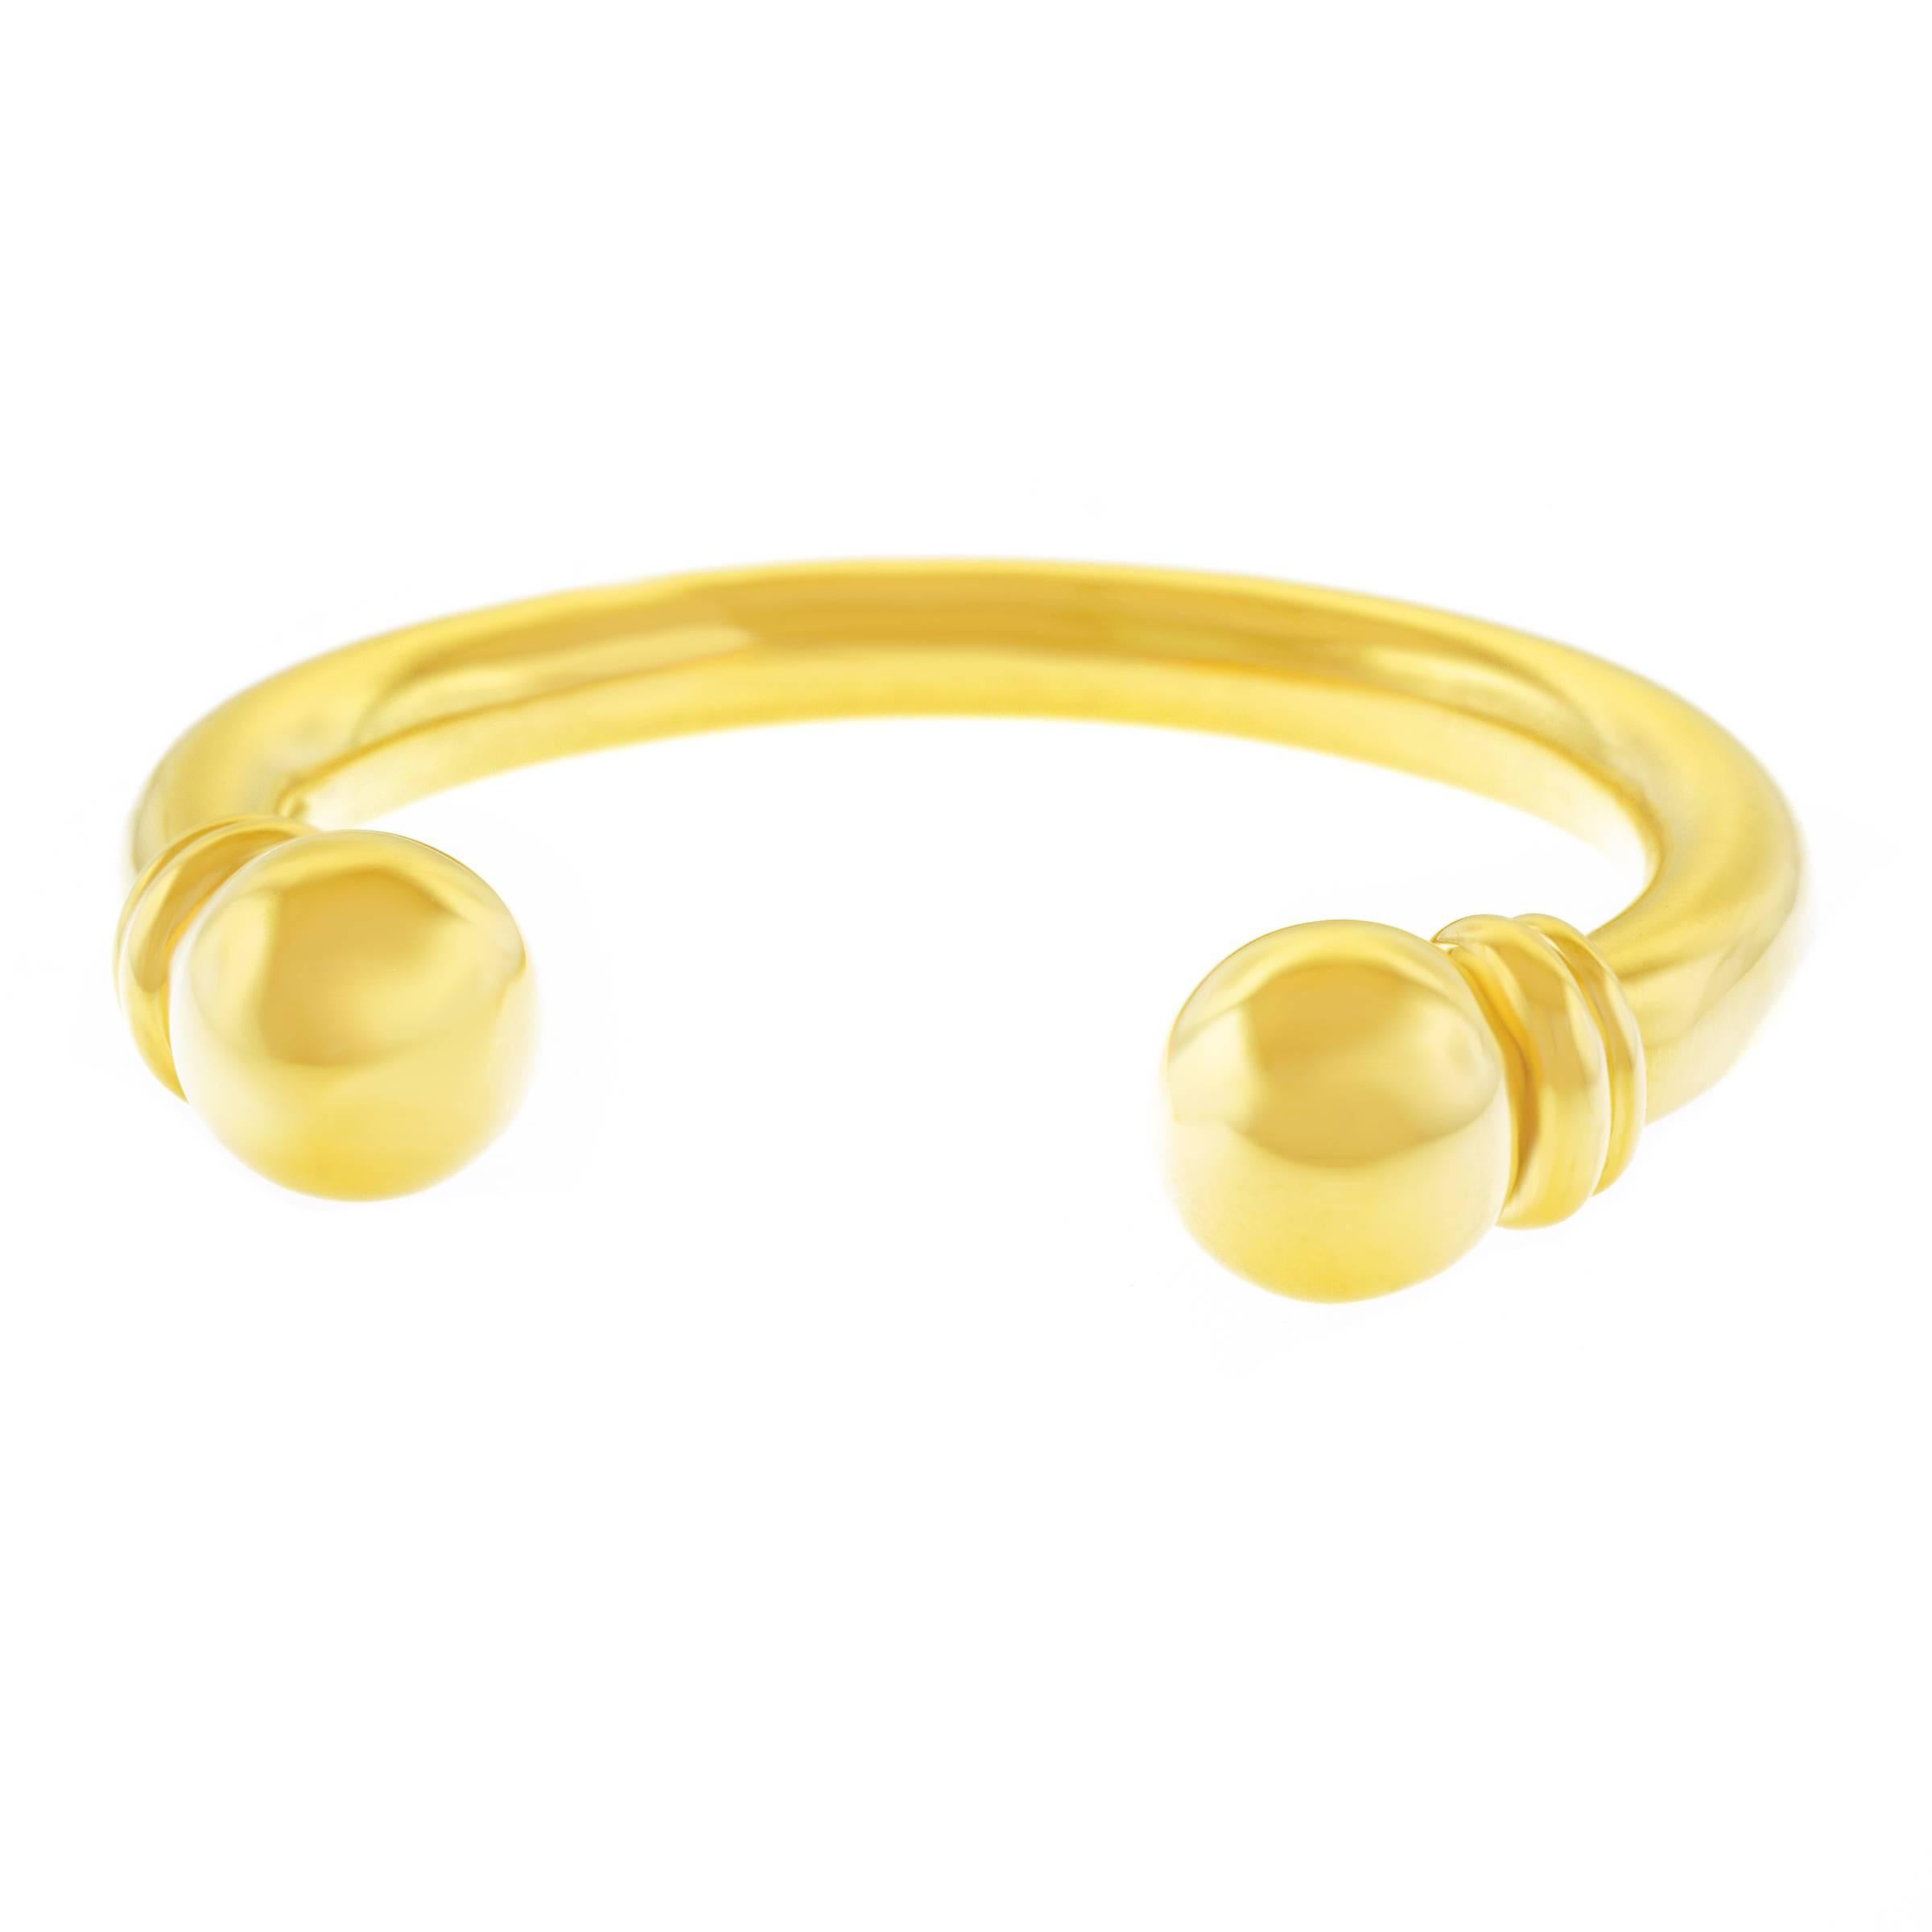 Chic Gold Bangle Bracelet 6